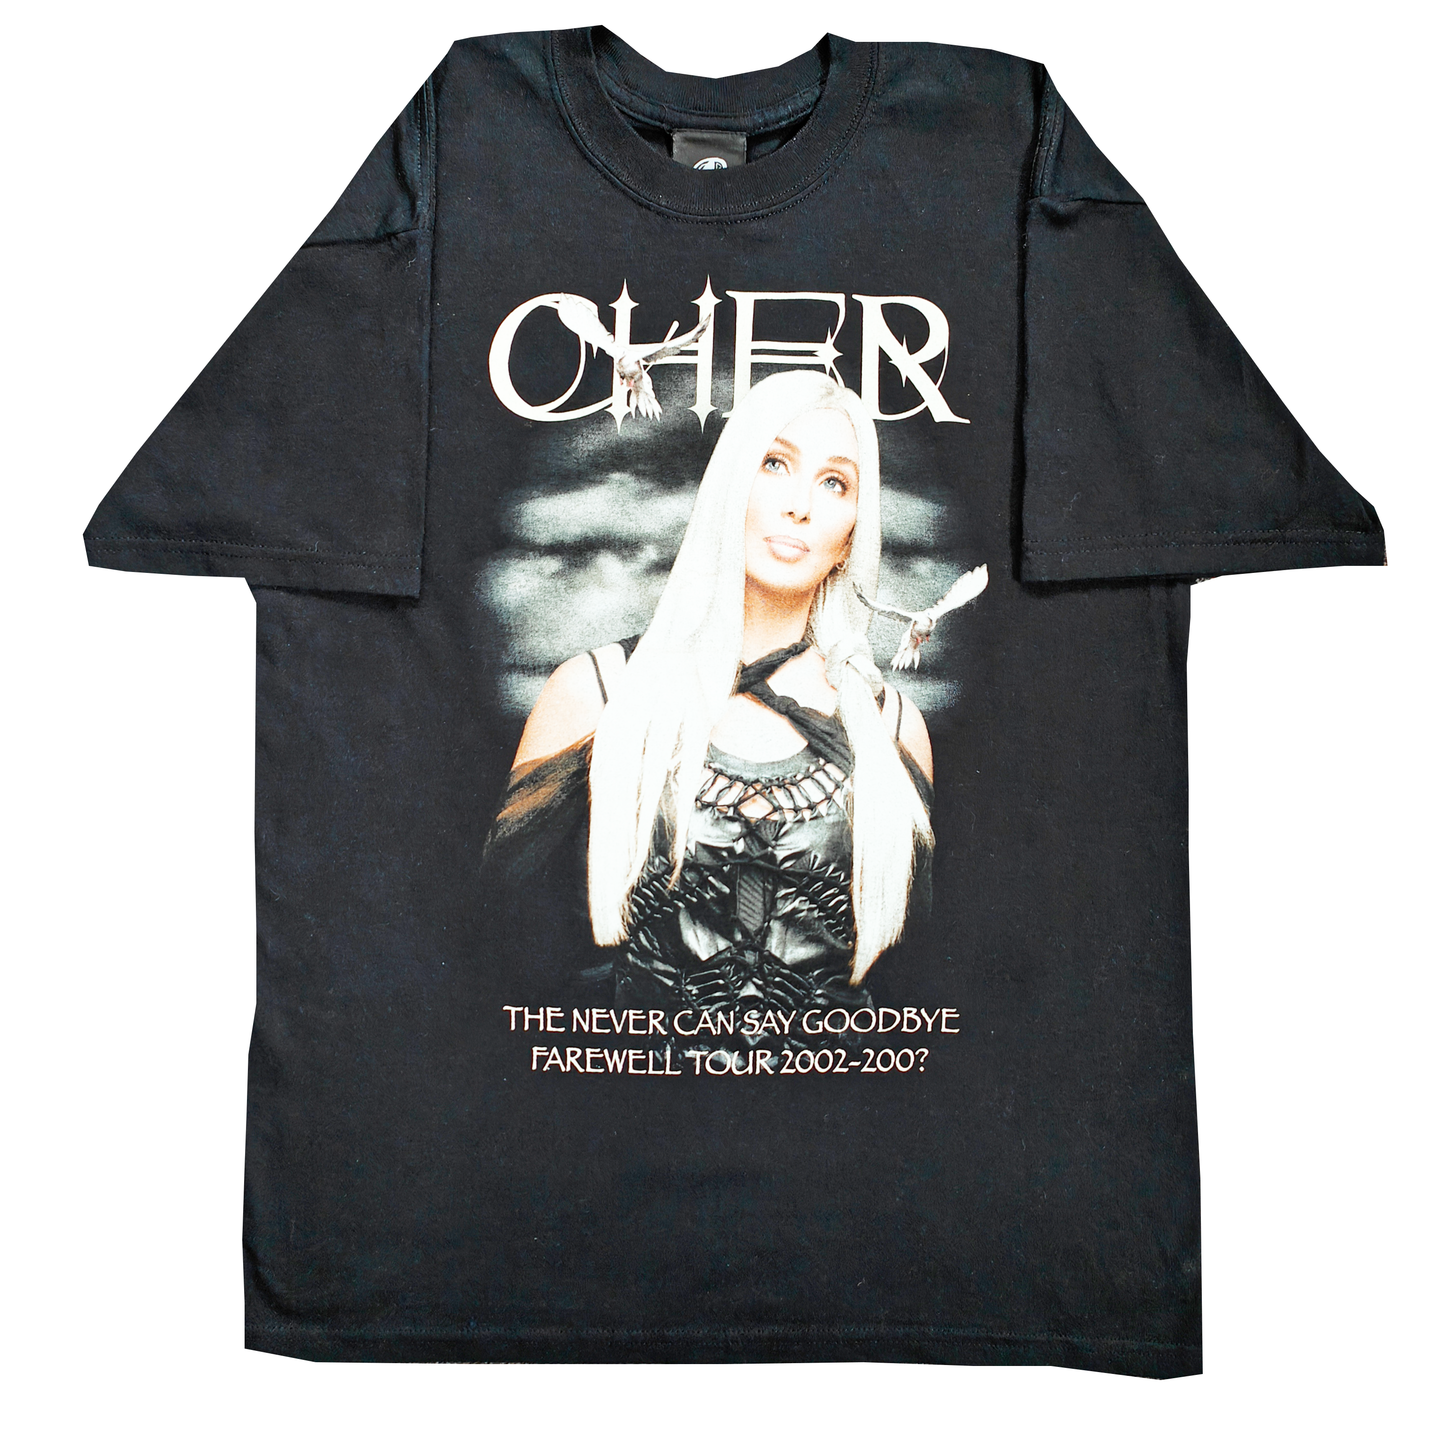 Cher Never Say Goodbye Tour (2002) Tee - MEDIUM